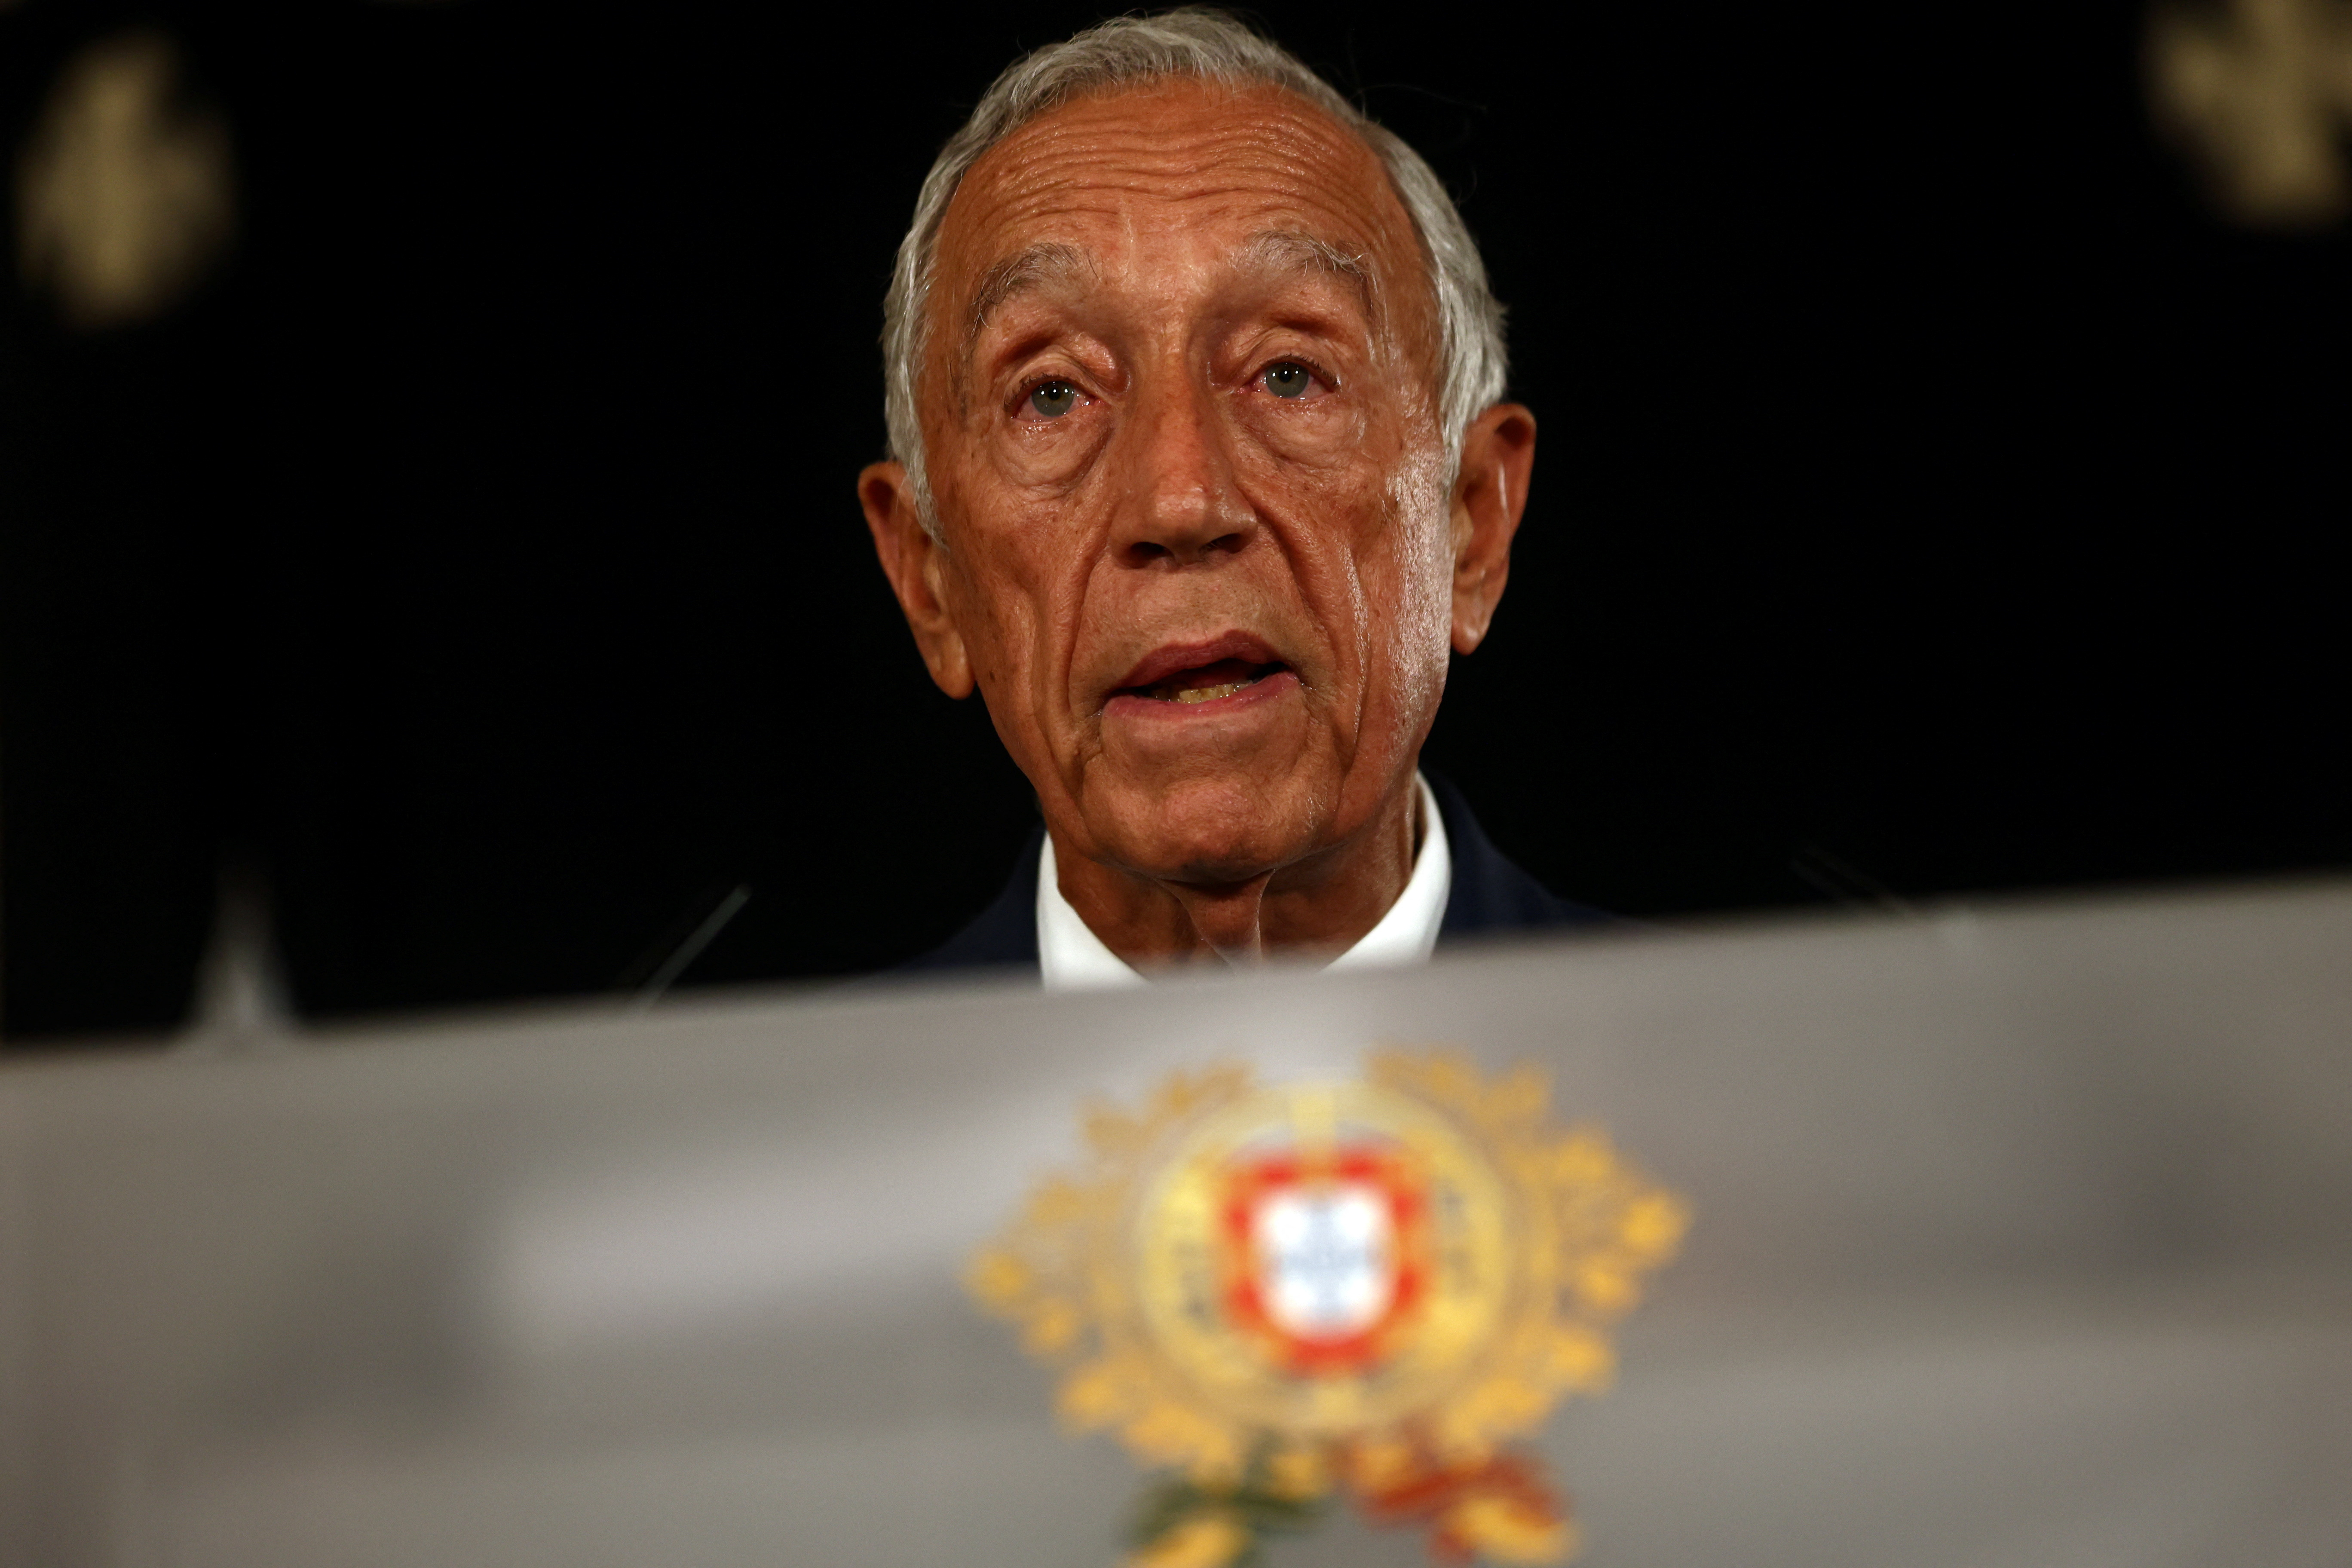 Portugal's President Marcelo Rebelo de Sousa addresses the nation in Belem Palace, Lisbon